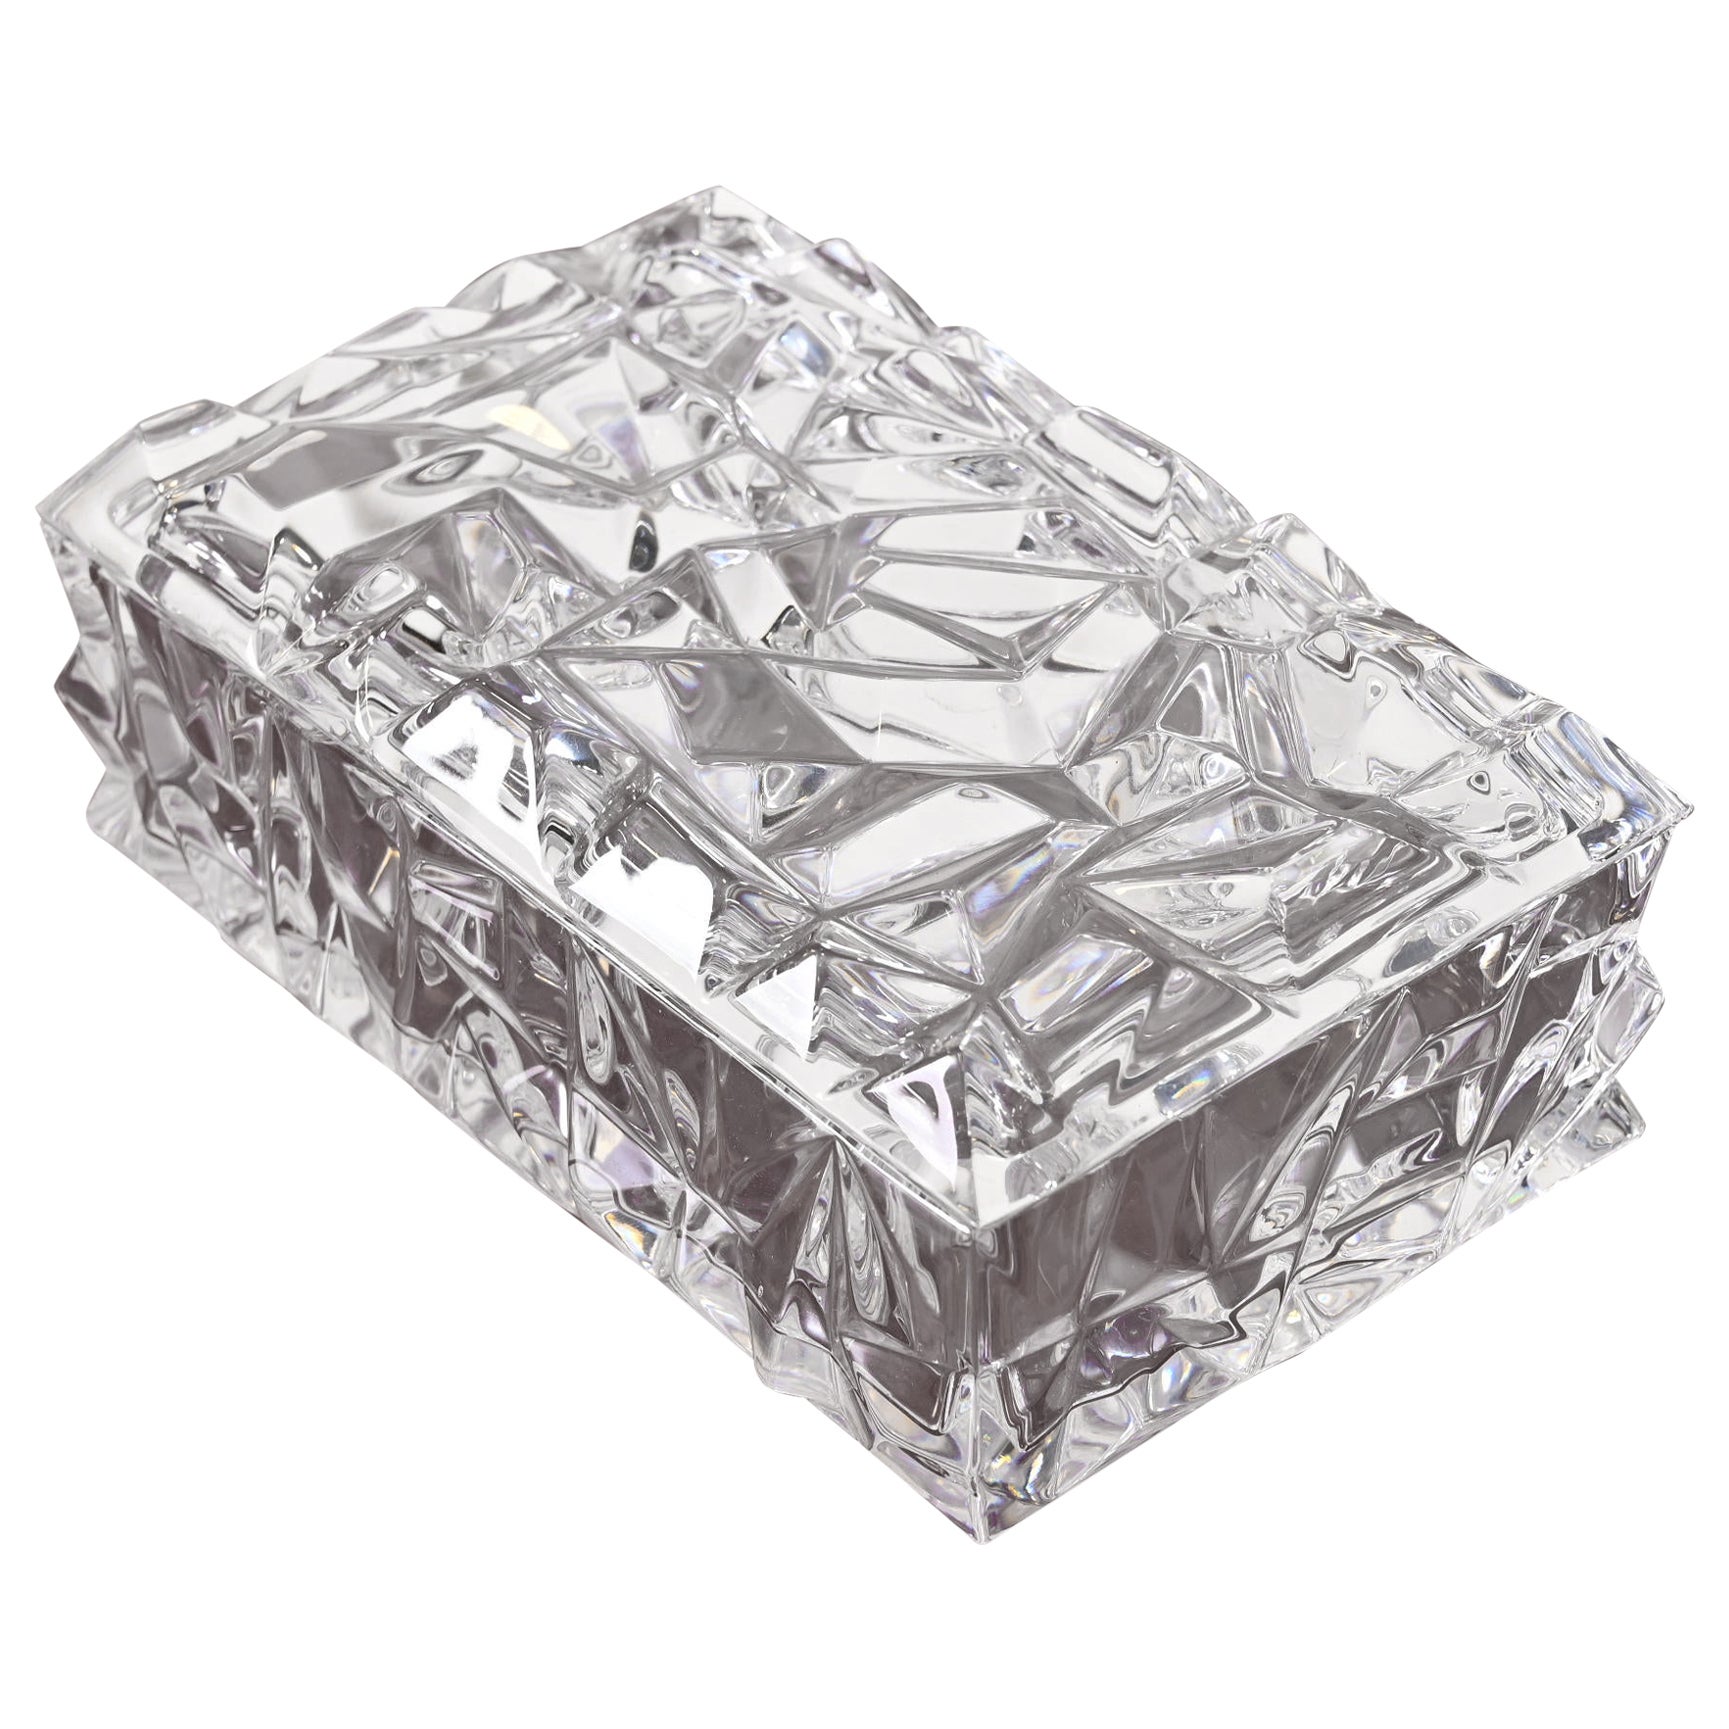 Tiffany & Co. Klarer facettierter Kristall Kommodenkasten